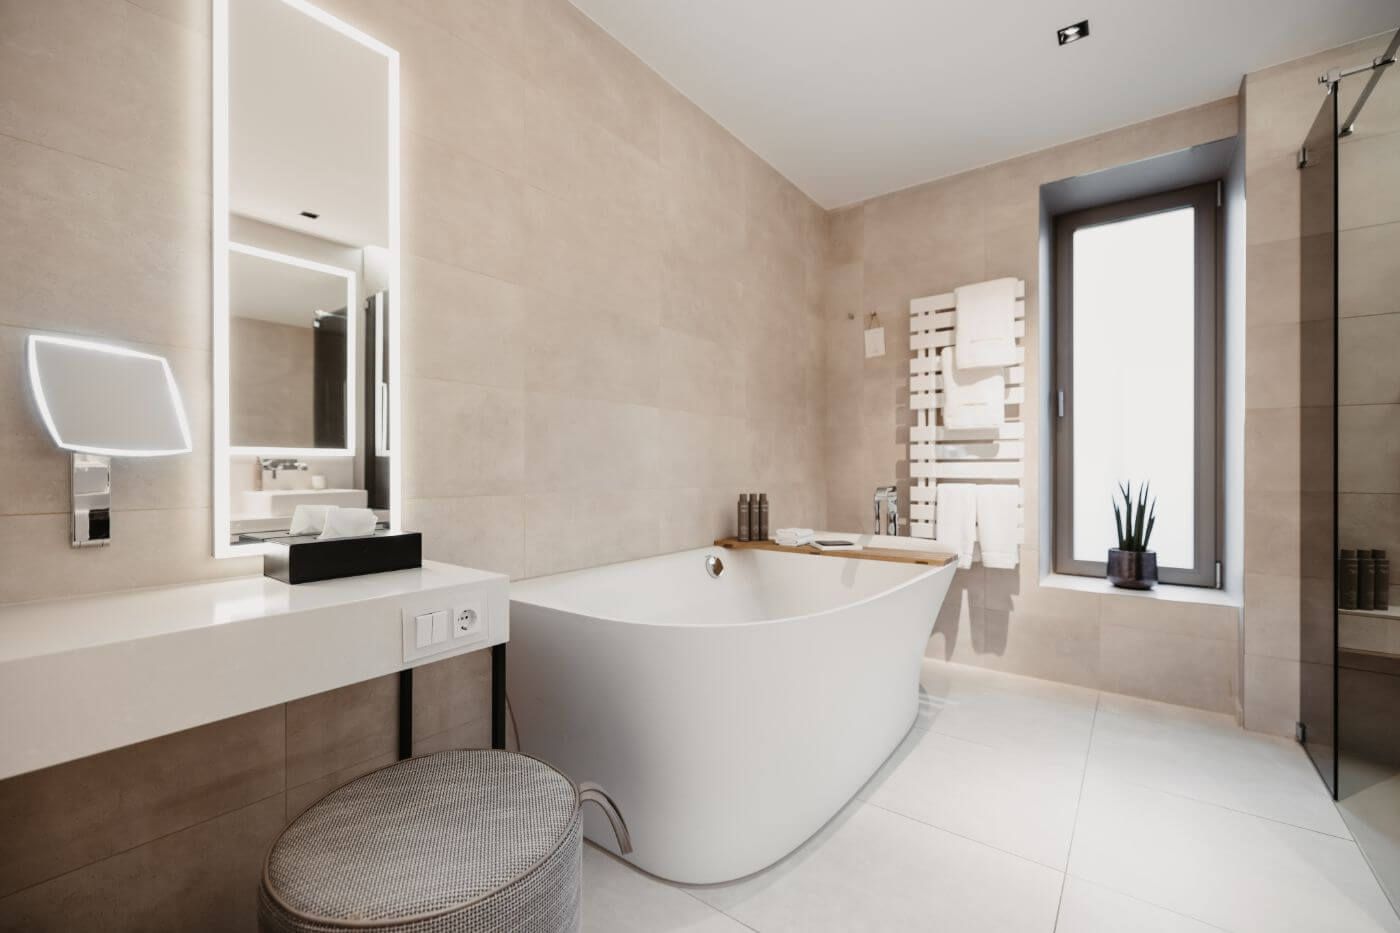 Large bathroom with bathtub, heated towel rail and dressing table with illuminated mirror